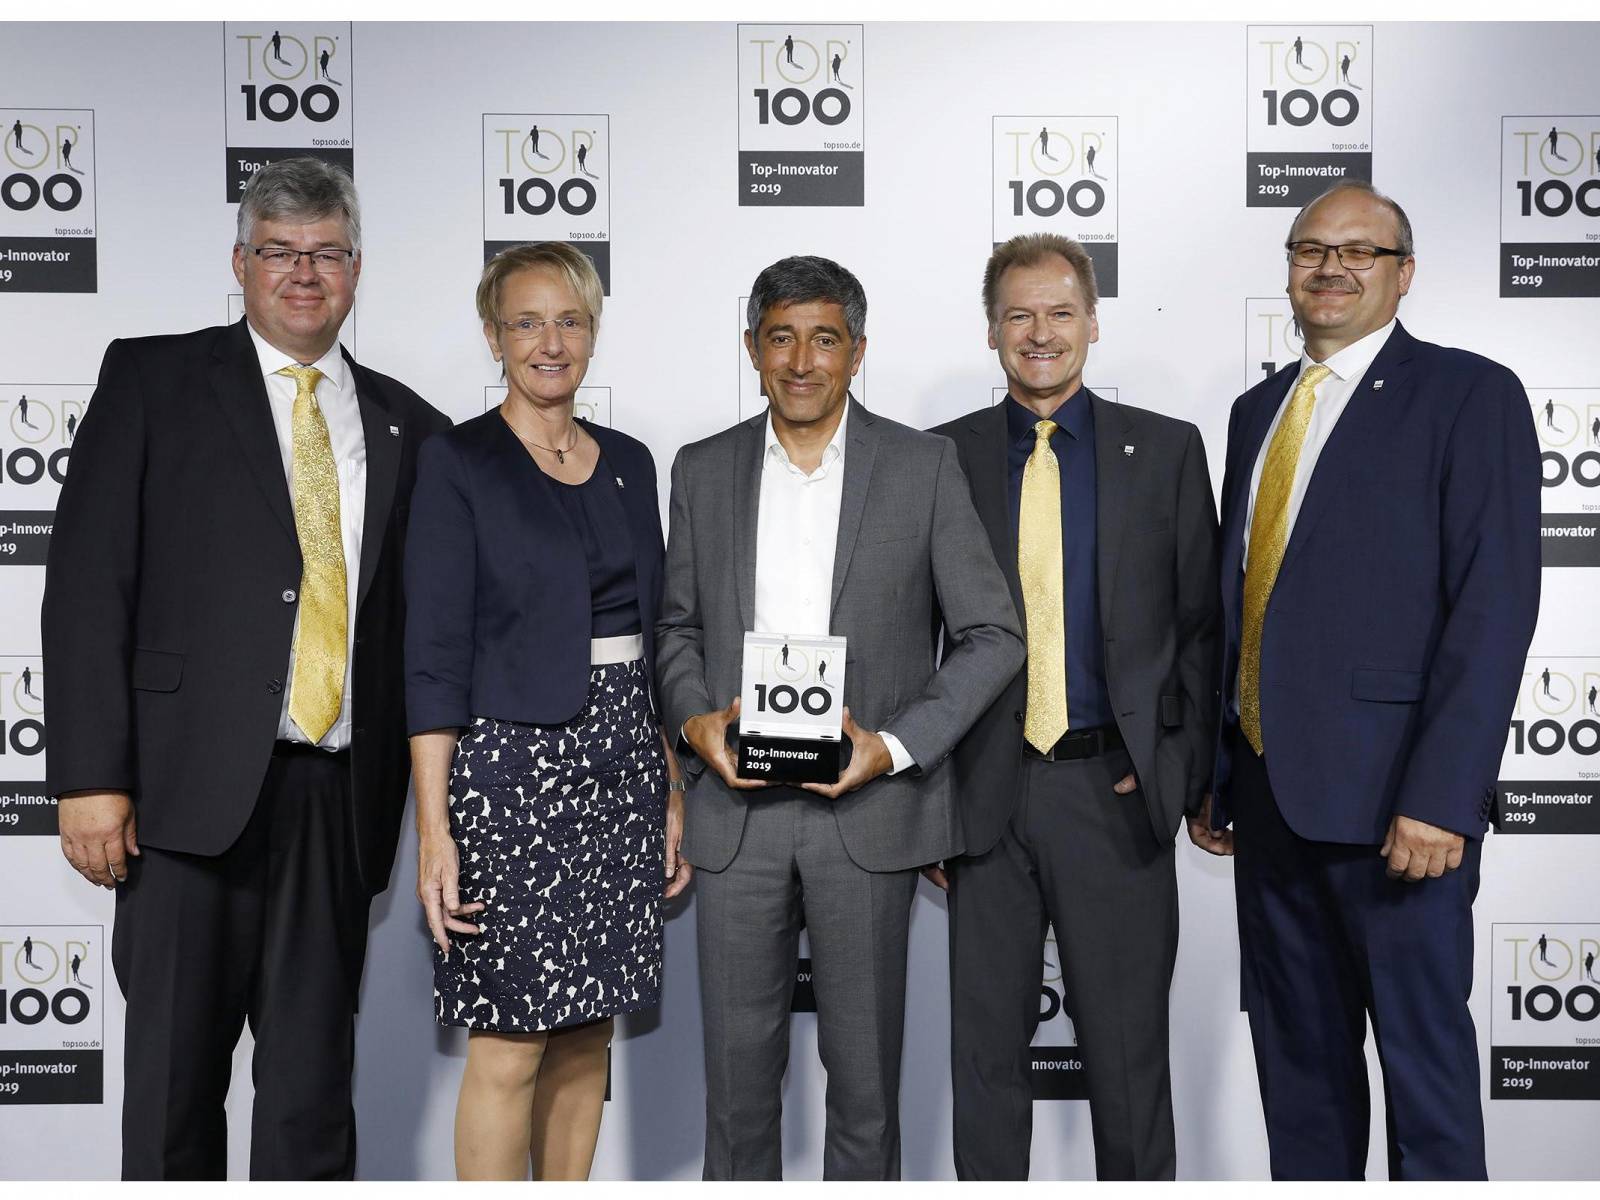 Award as Top 100 Innovator Presentation of the Top 100 Innovator award